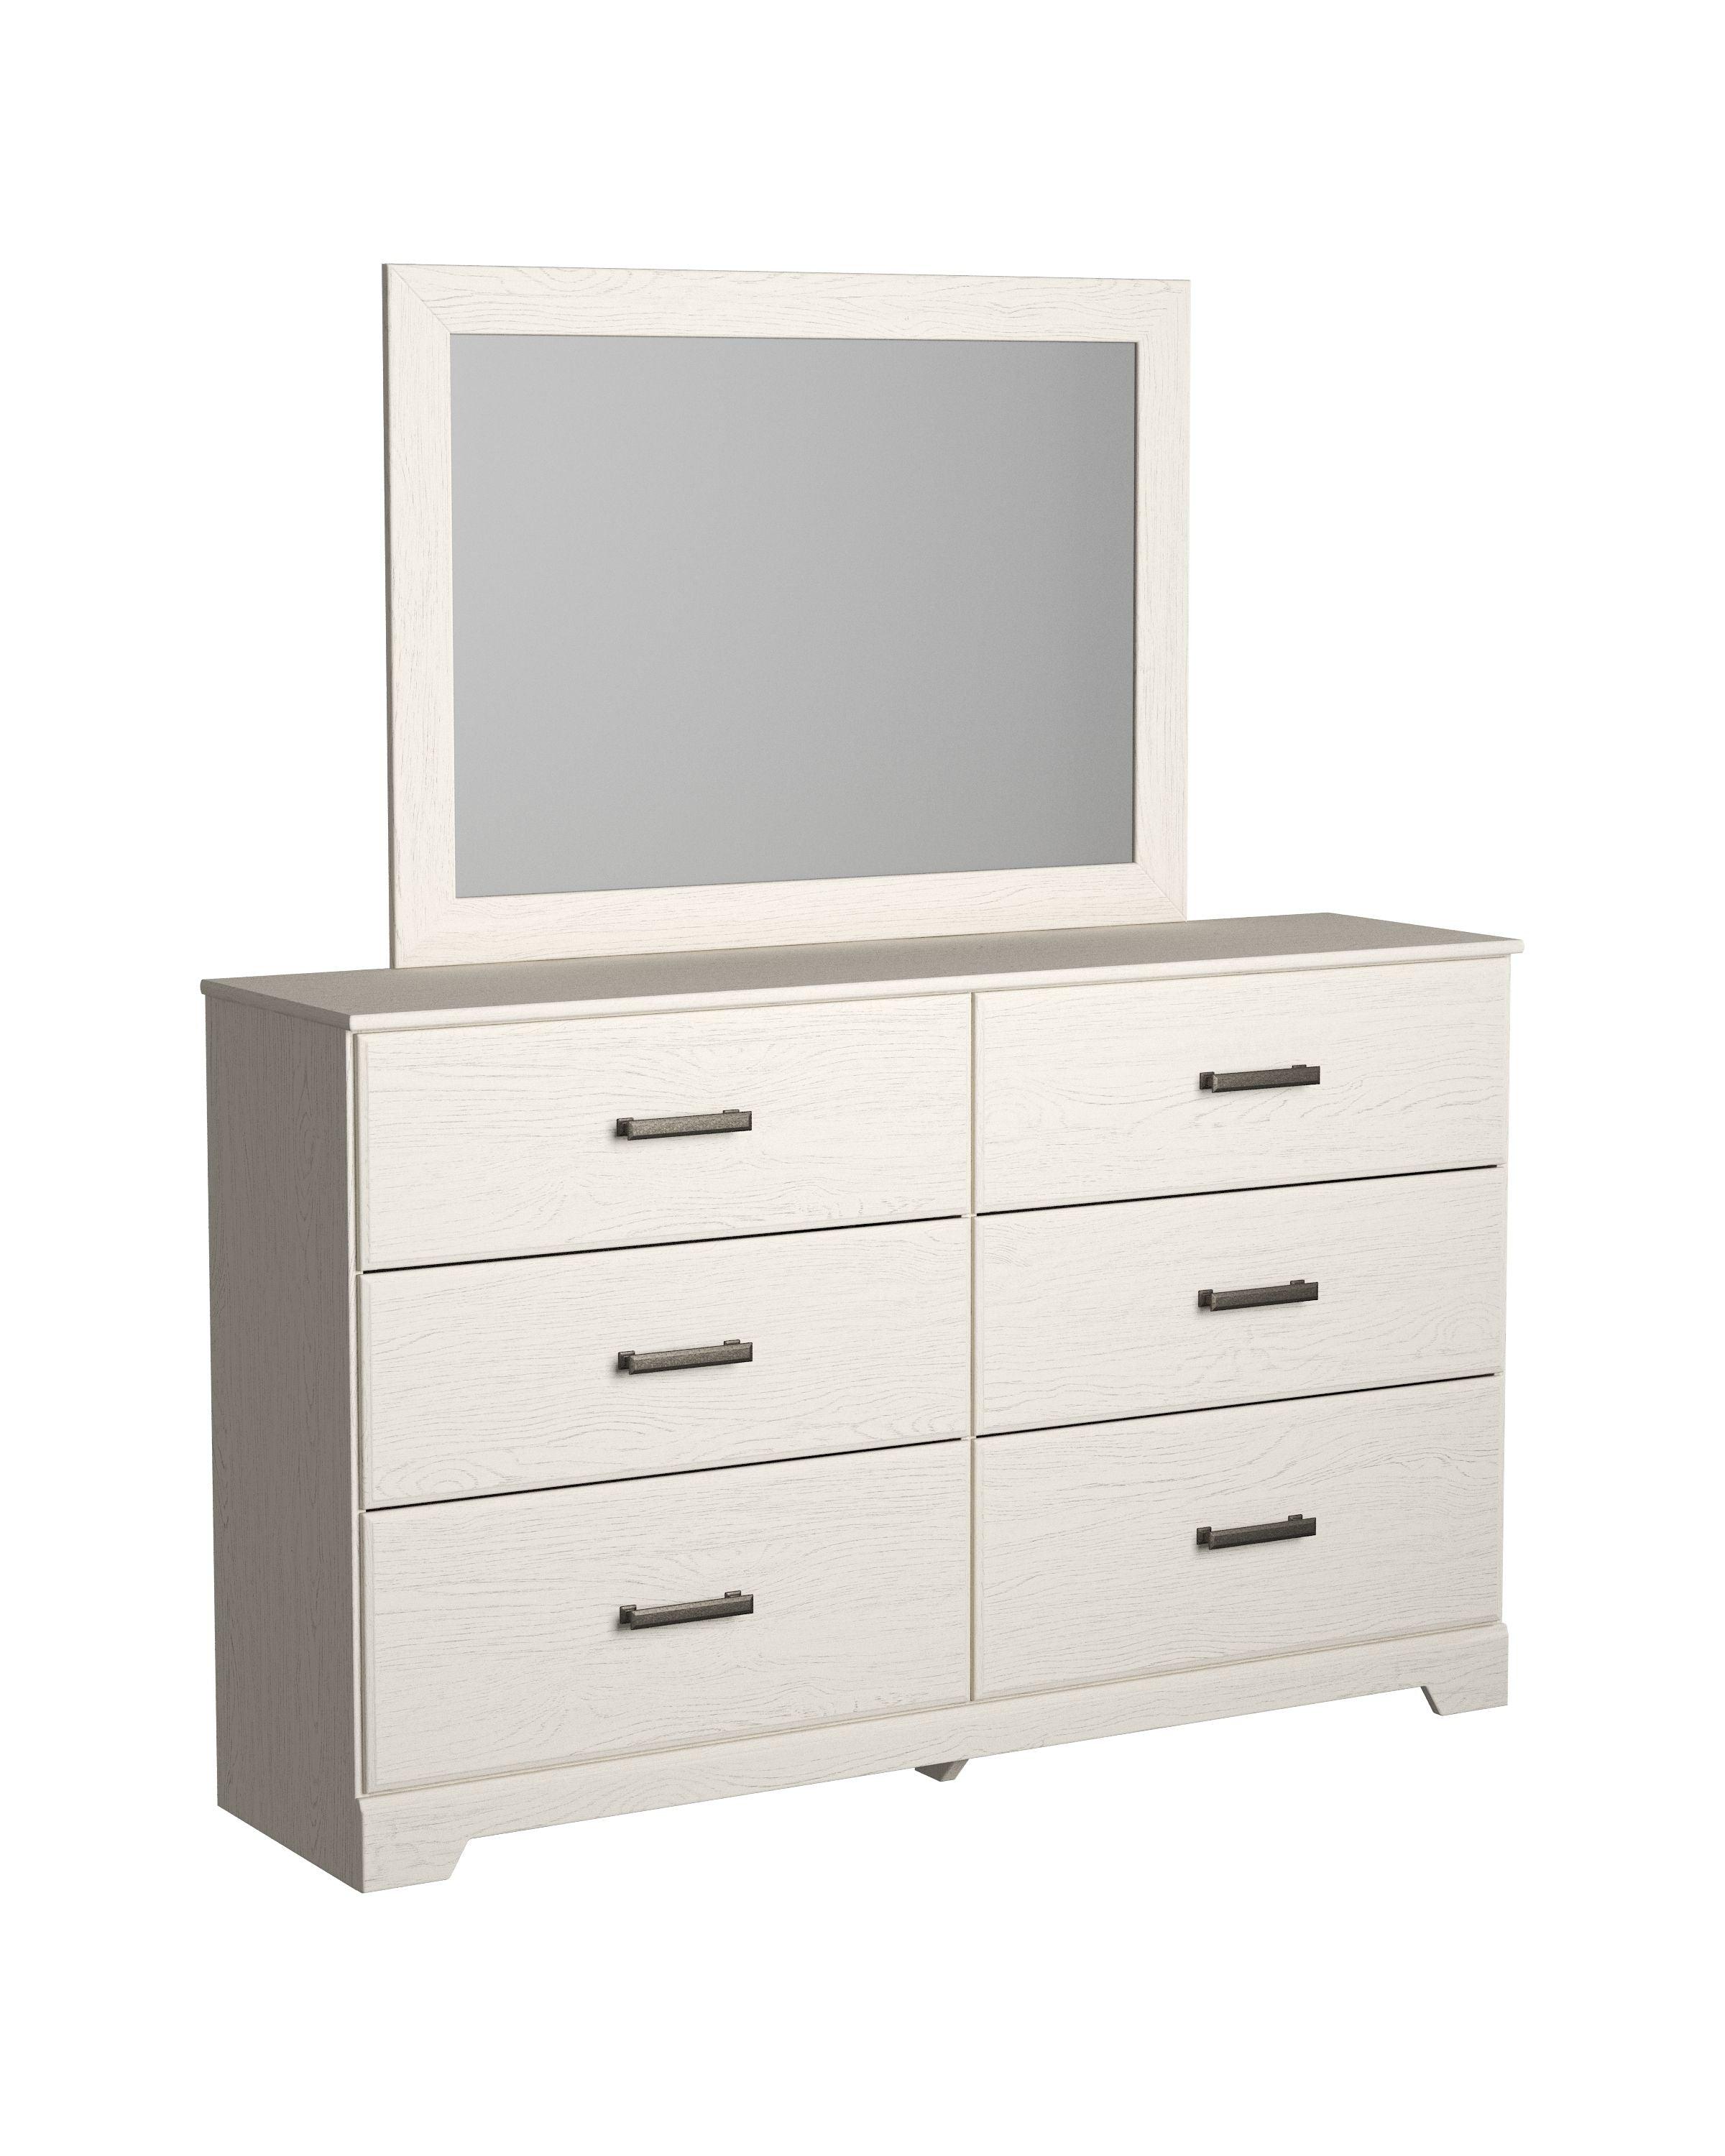 Ashley Furniture - Stelsie - White - Bedroom Mirror - 5th Avenue Furniture